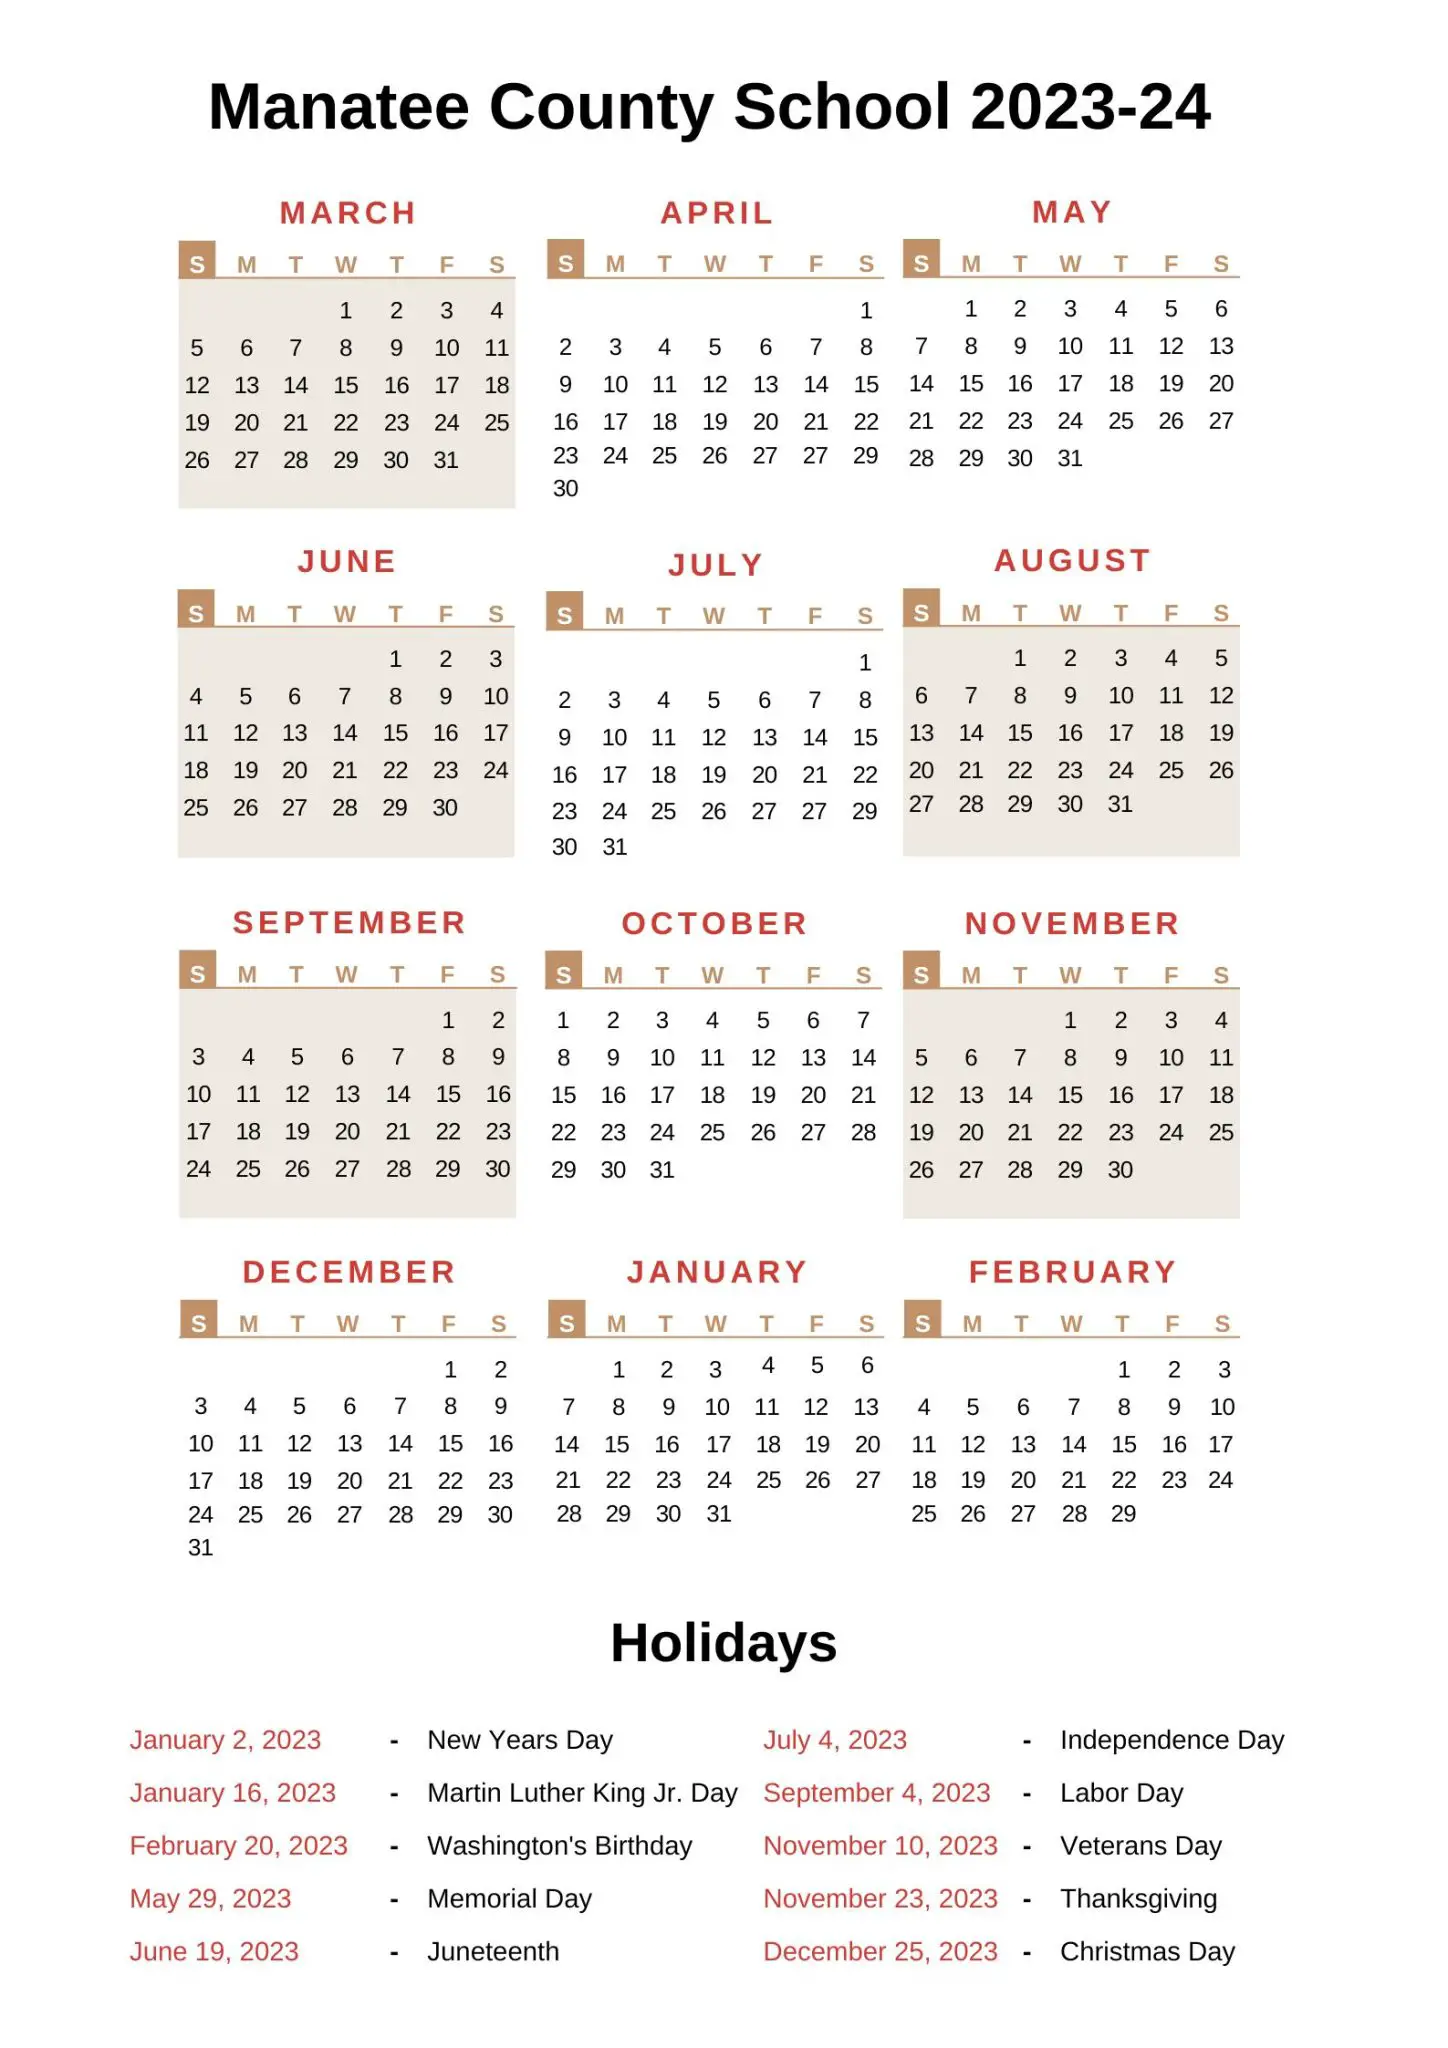 manatee-county-school-calendar-with-holidays-2022-2023